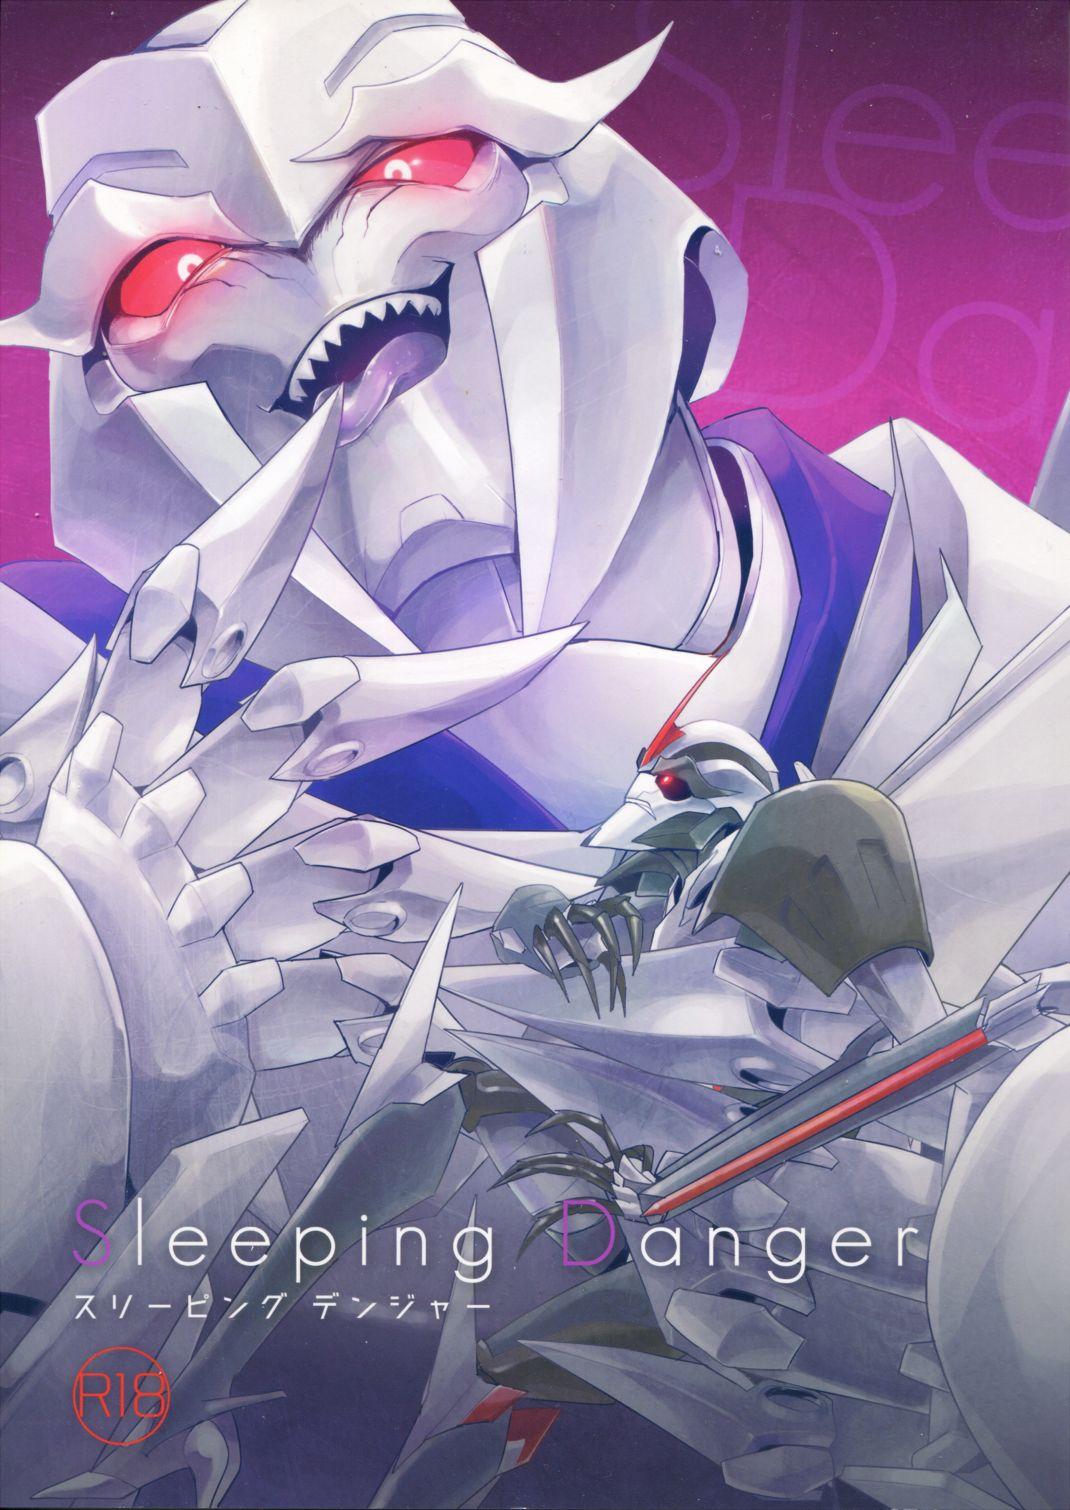 Free Fuck Sleeping Danger - Transformers Sweet - Picture 1